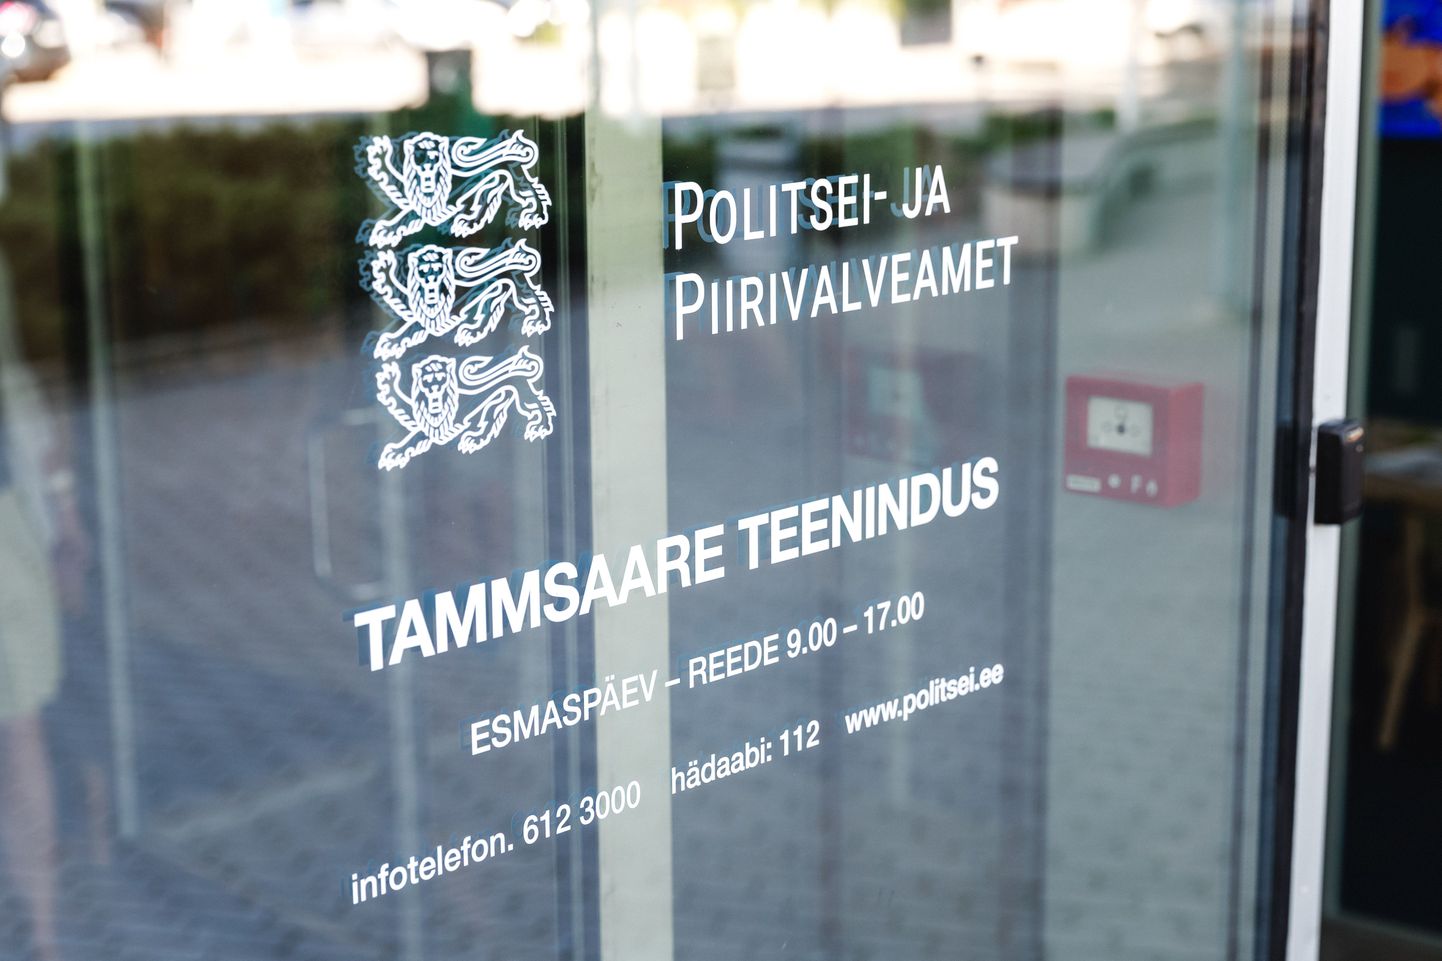 Politsei-ja Piirivalveameti Tammsaare teenindusbüroo.